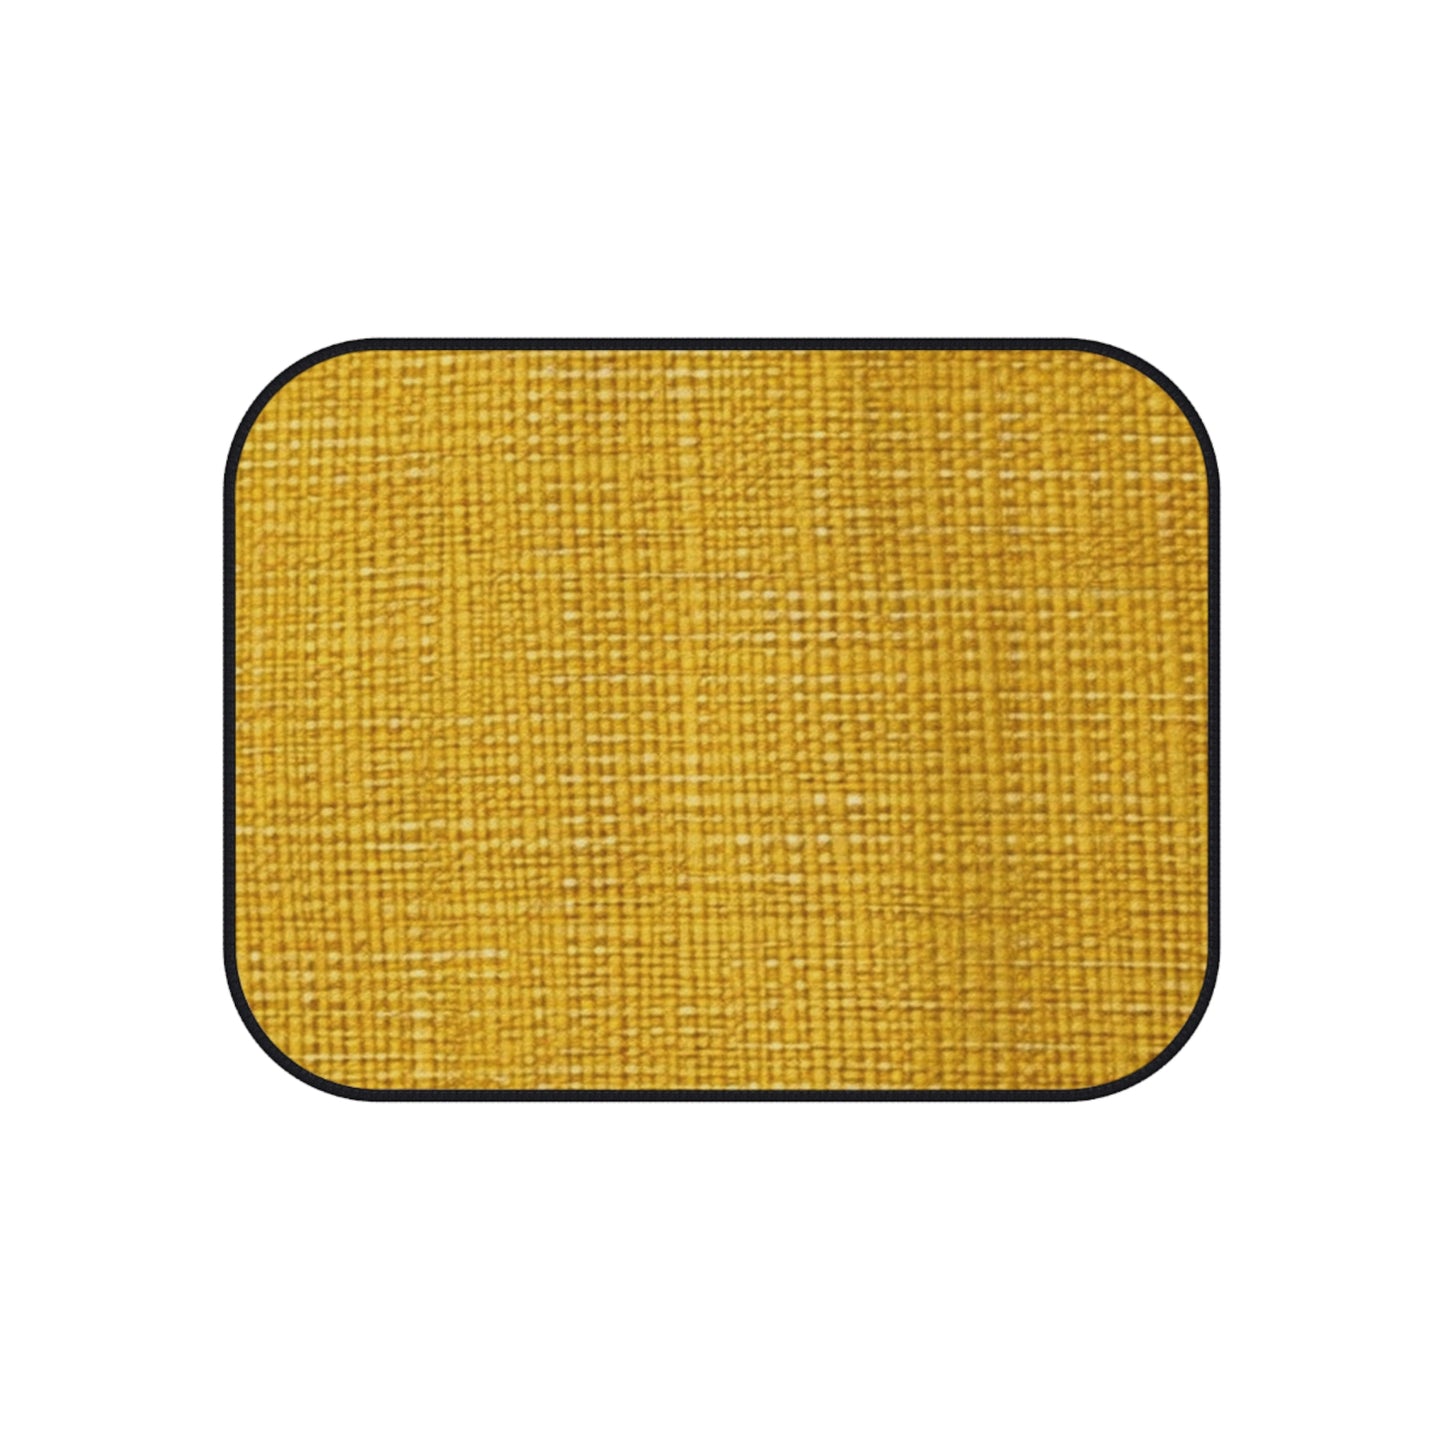 Radiant Sunny Yellow: Denim-Inspired Summer Fabric - Car Mats (Set of 4)